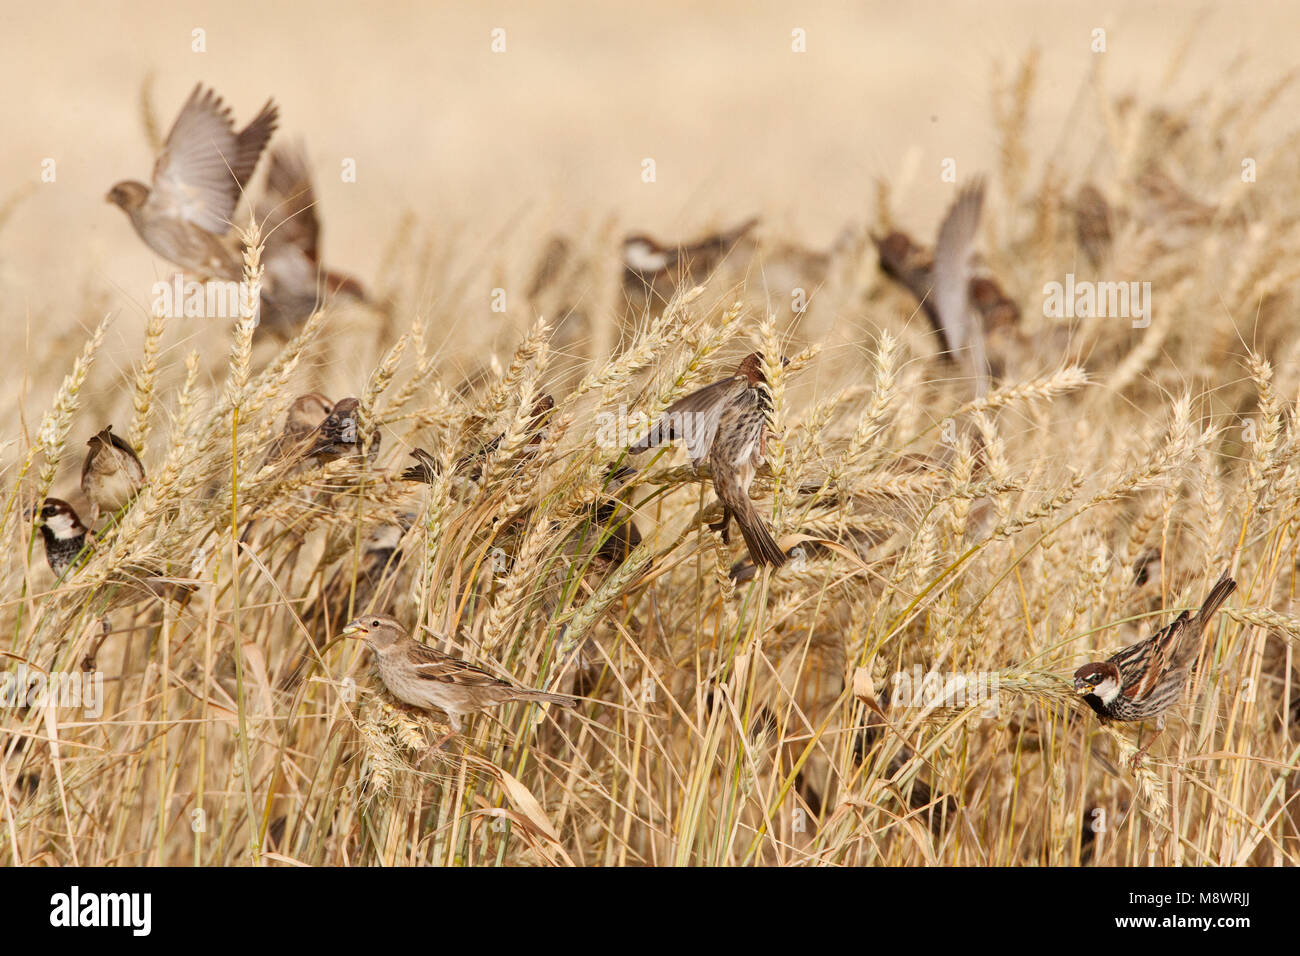 Spaanse Mus Groep etend Van Graan; Spanisch Sparrow Herde füttern auf Korn Stockfoto